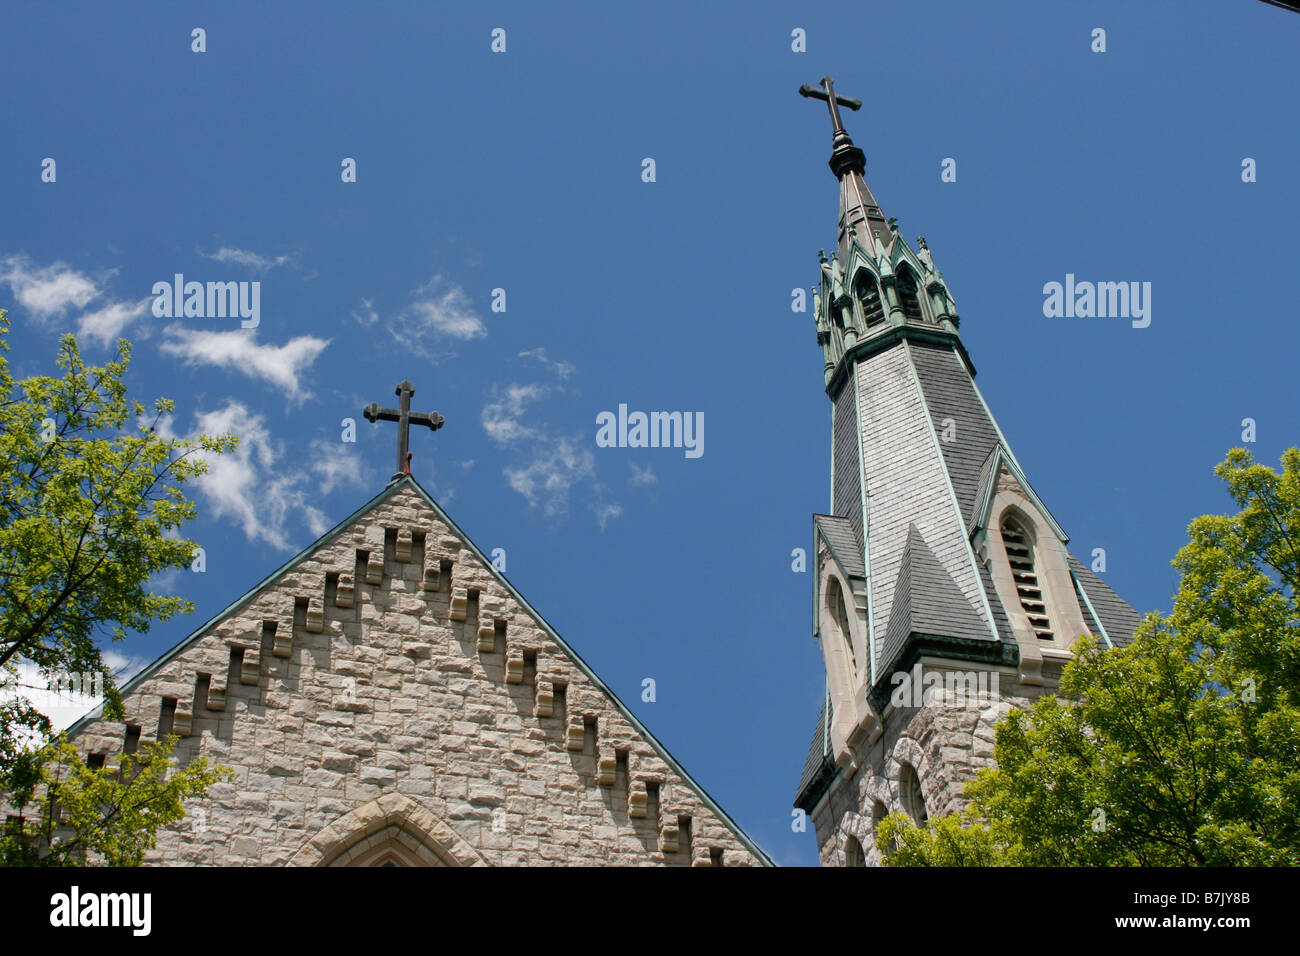 Catholic church steeple and crosses. Stock Photo